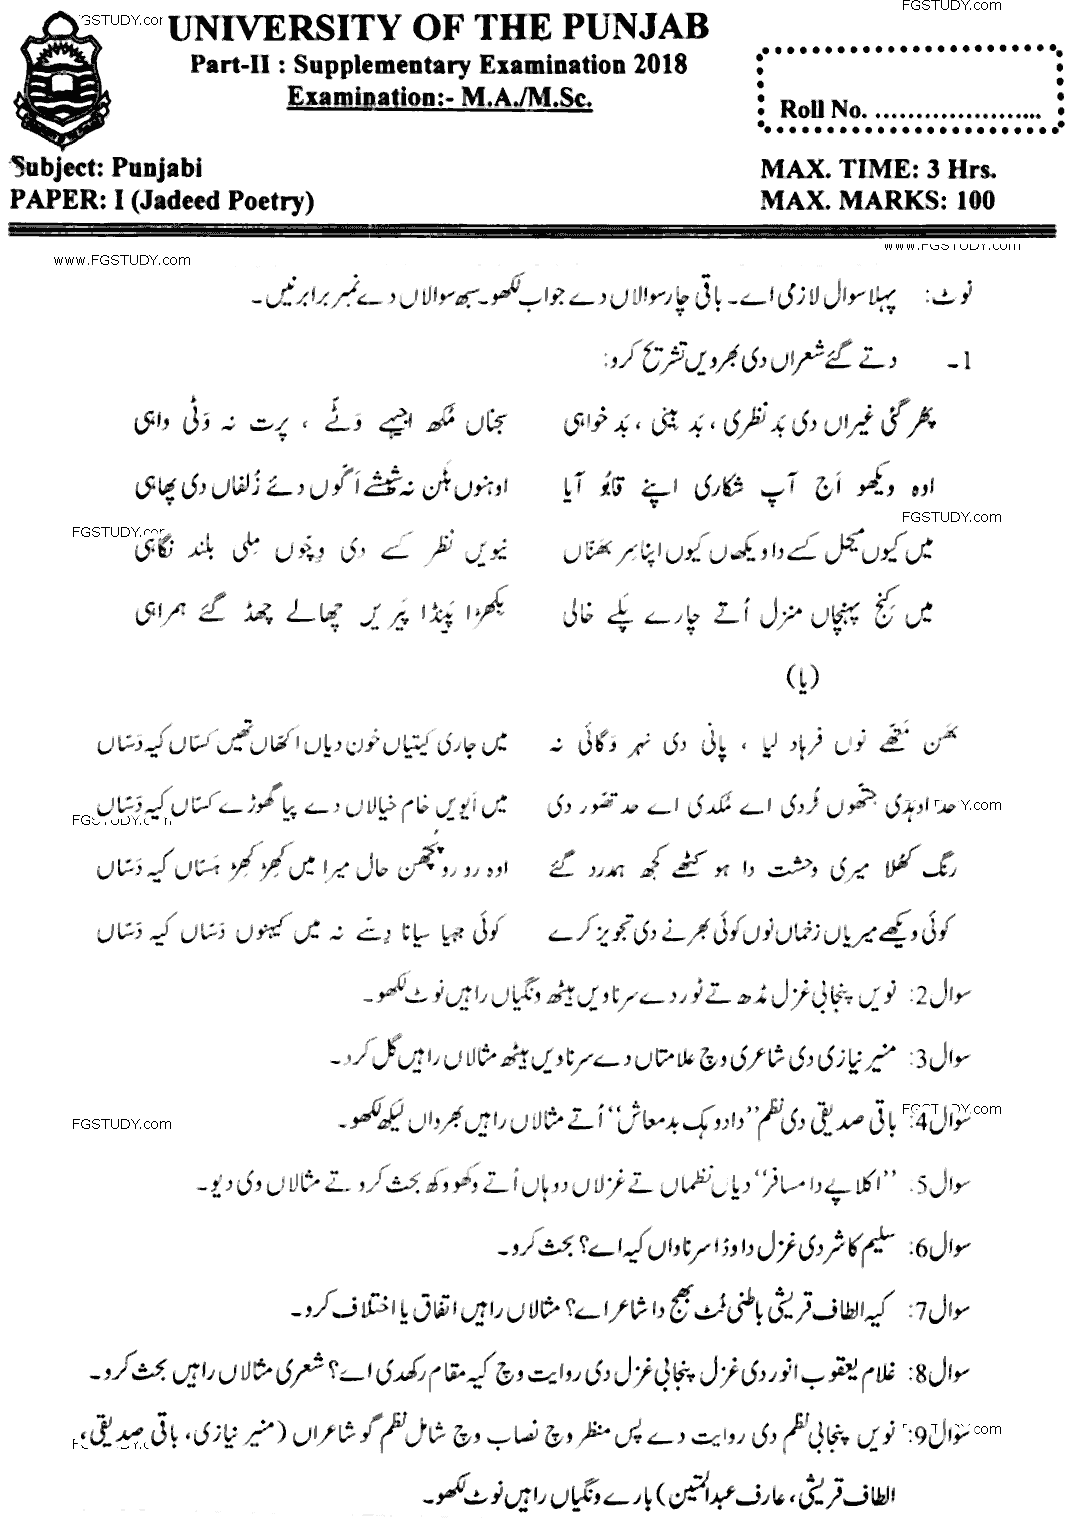 MA Part 2 Punjabi Jadeed Poetry Past Paper 2018 Punjab University